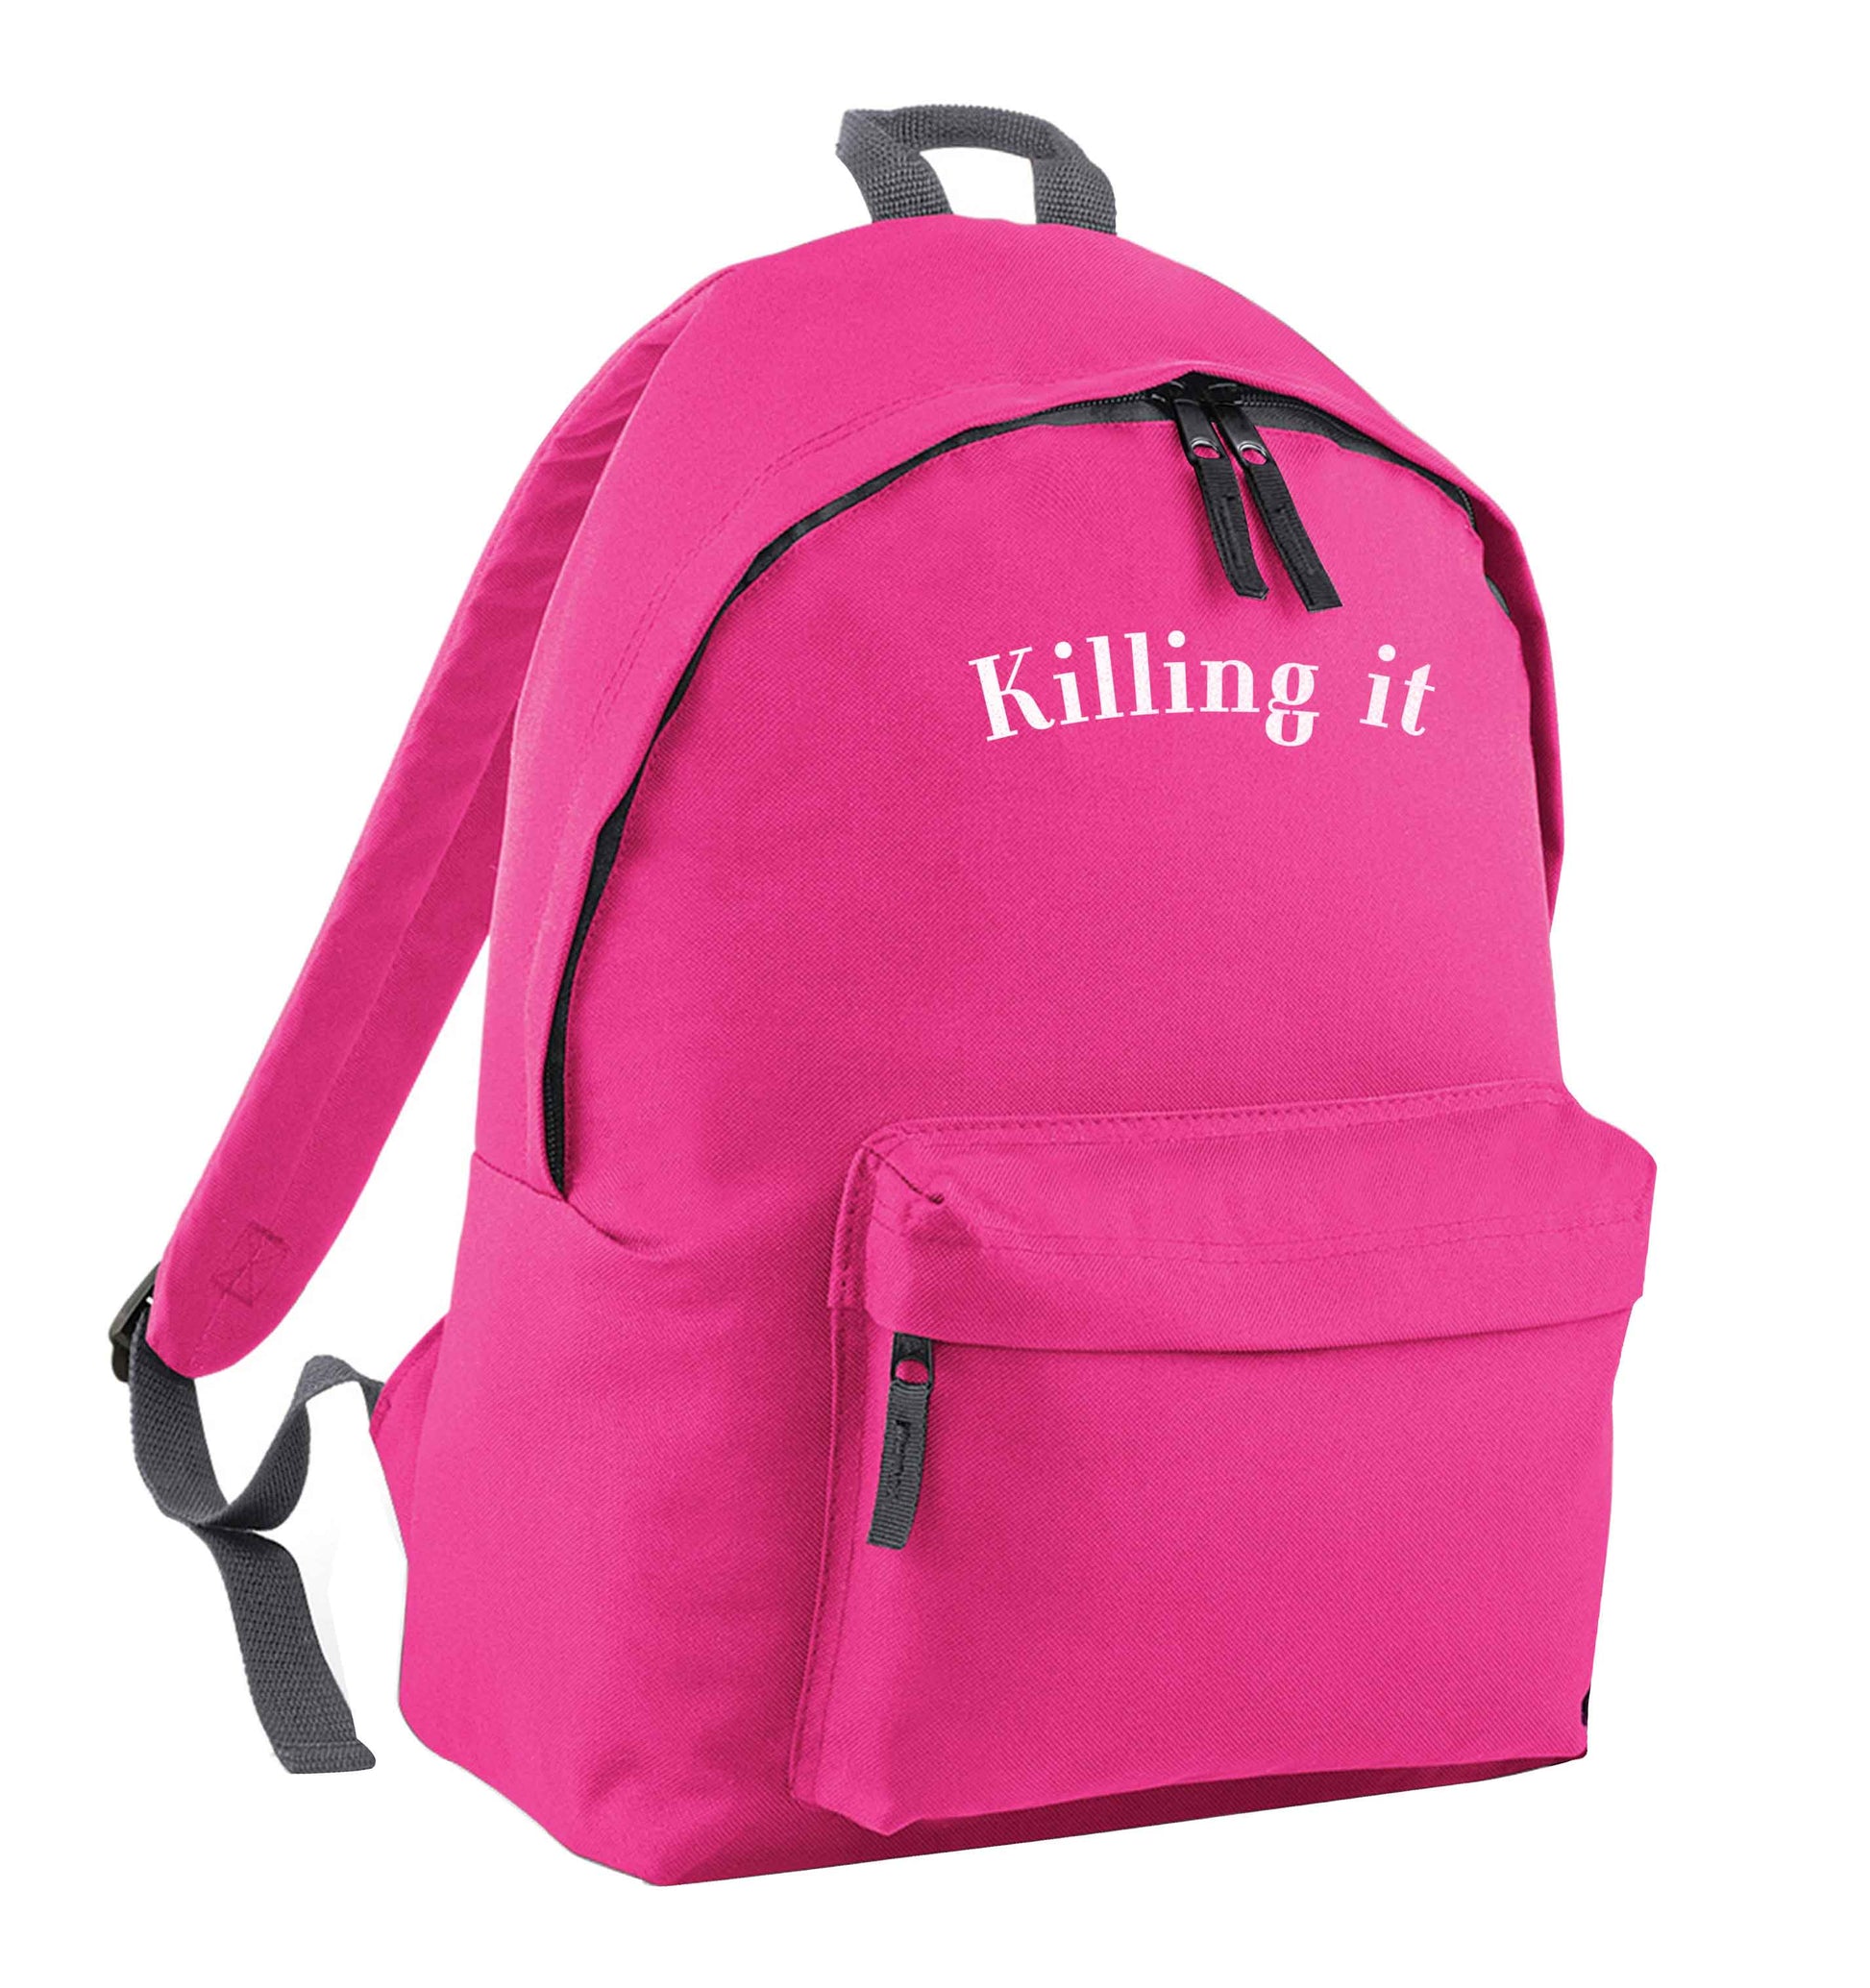 Killing it pink children's backpack